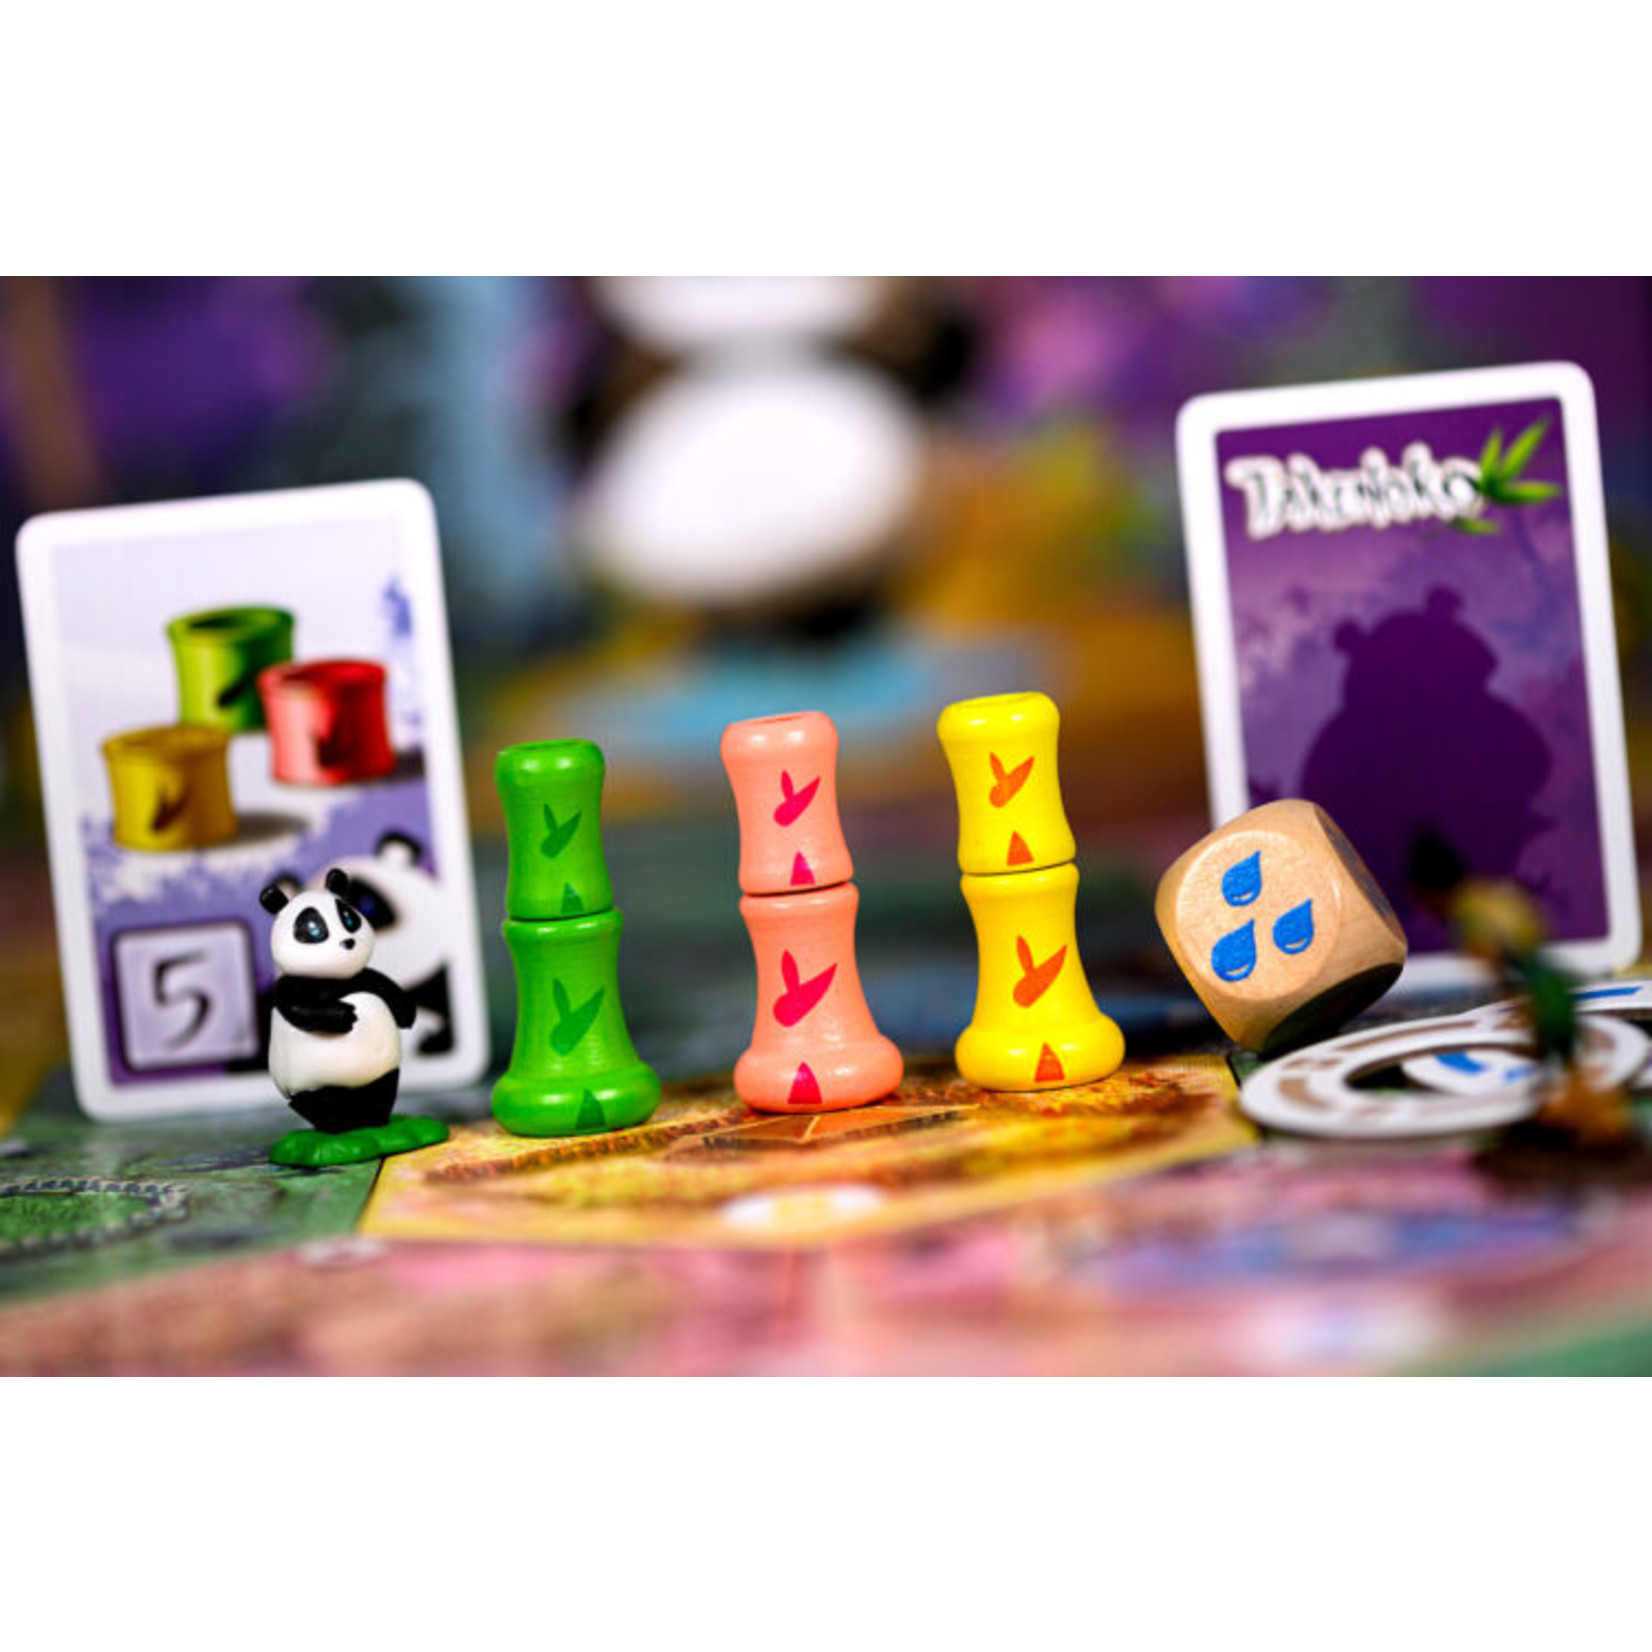 Takenoko - Board Game – Kitty Hawk Kites Online Store